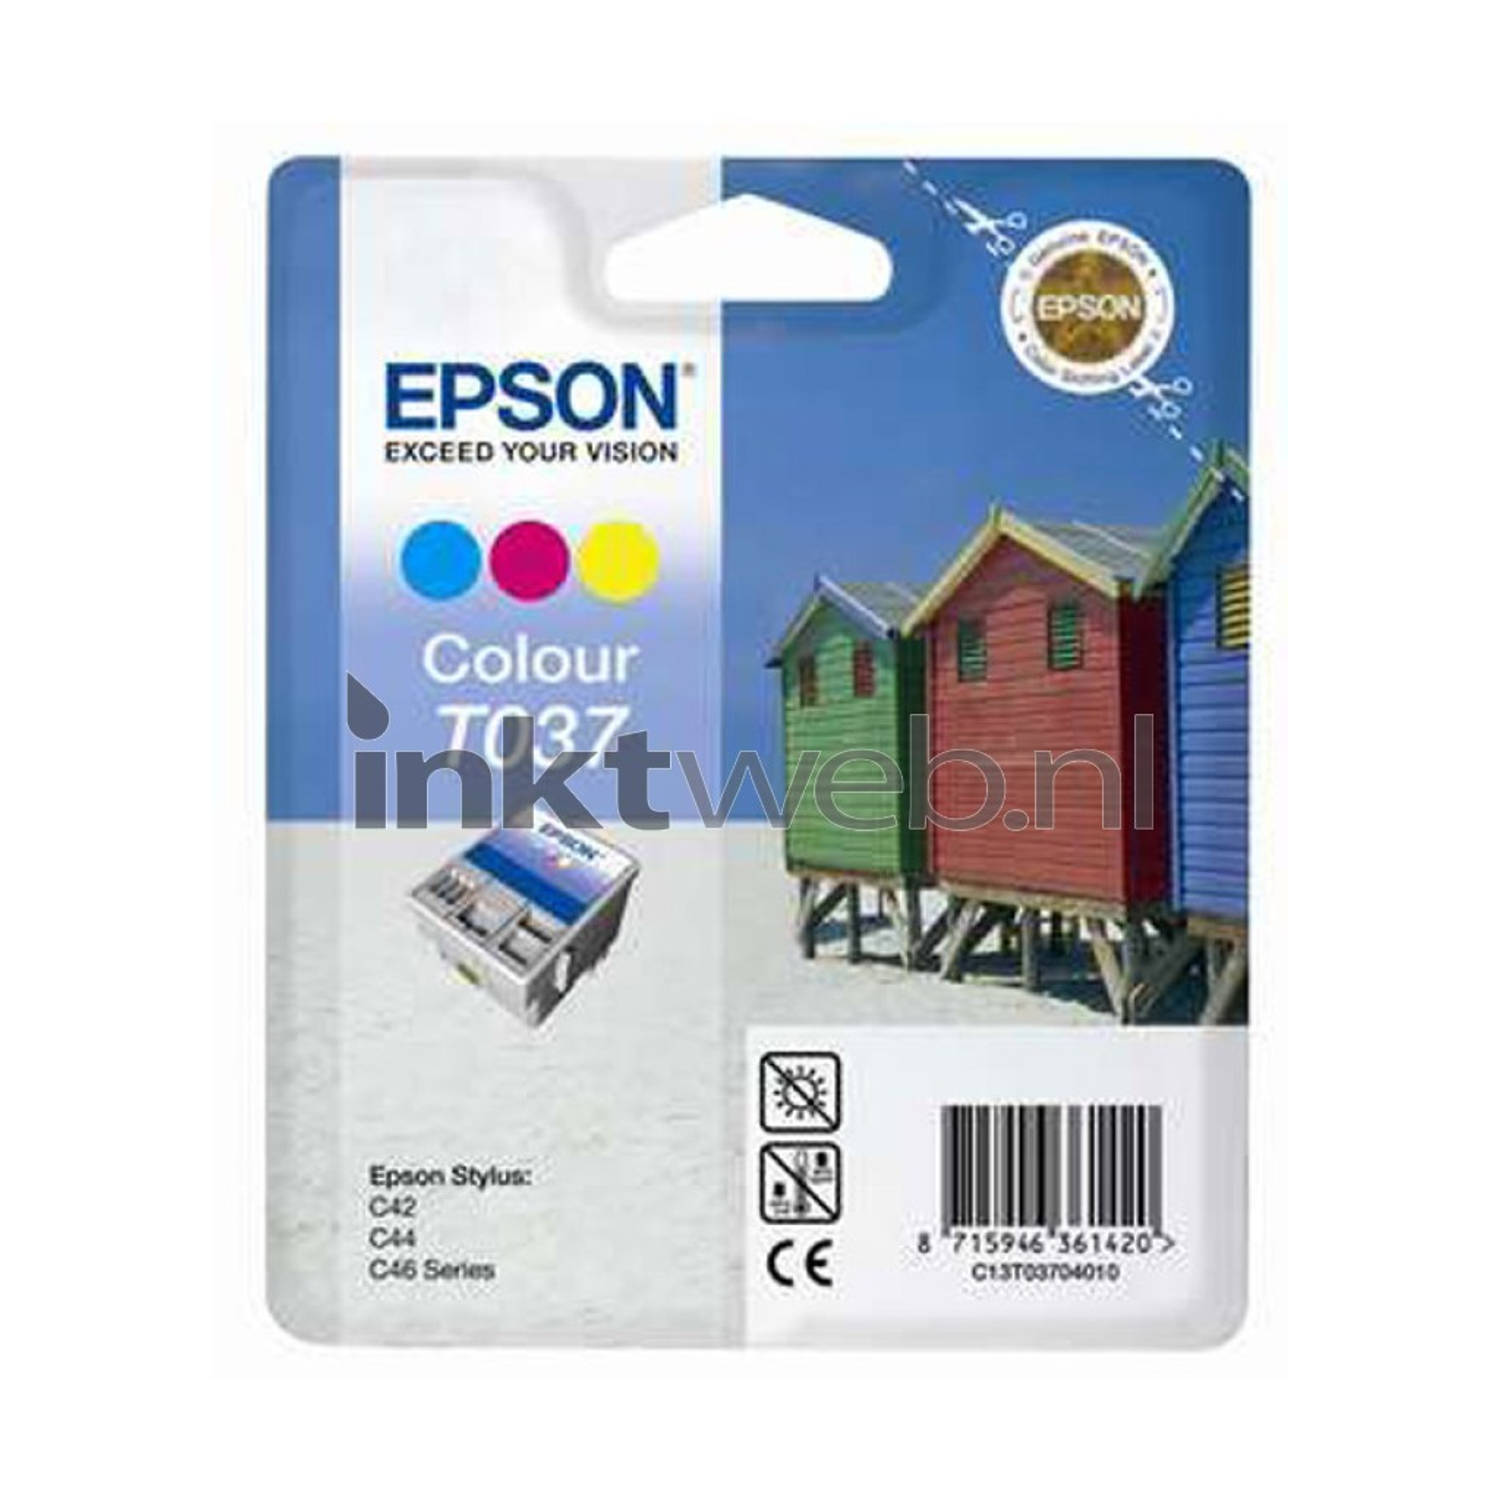 Epson T037 kleur cartridge